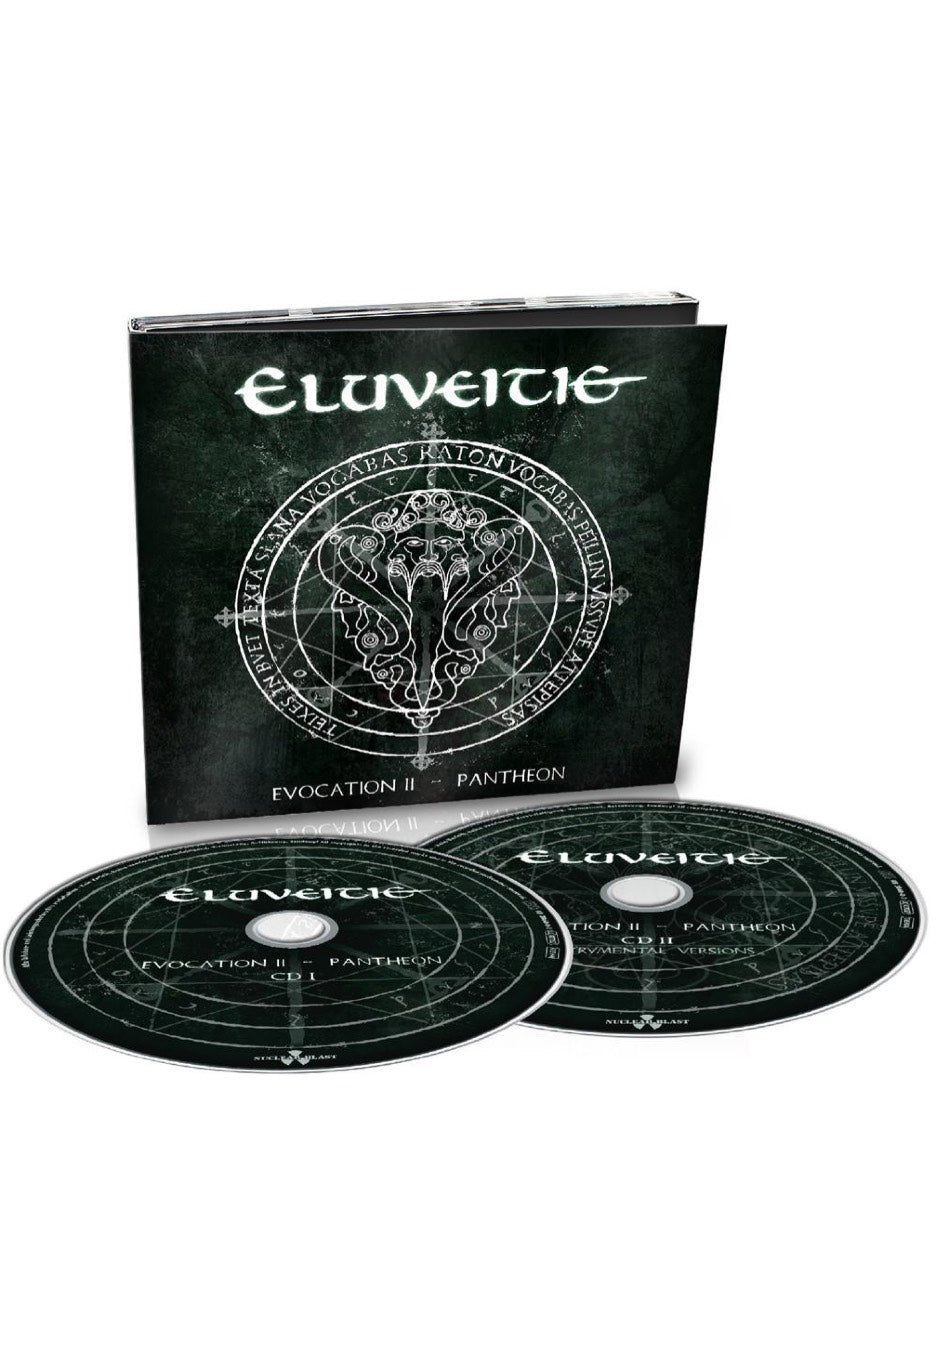 Eluveitie - Evocation II Pantheon (Limited Edition) - Digipak 2 CD